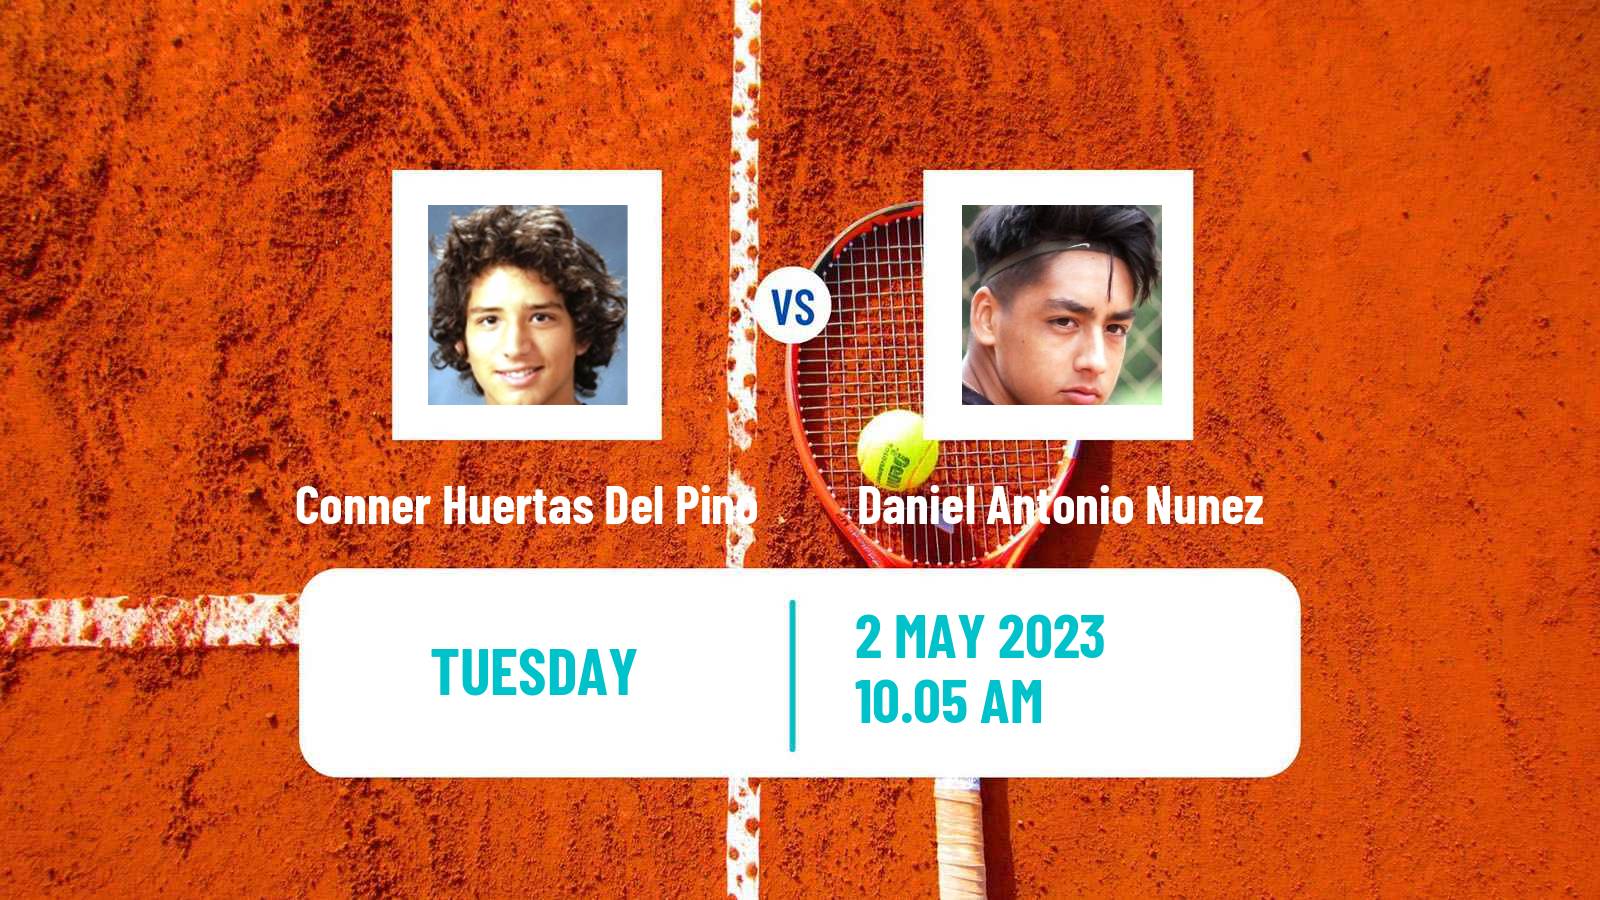 Tennis ATP Challenger Conner Huertas Del Pino - Daniel Antonio Nunez